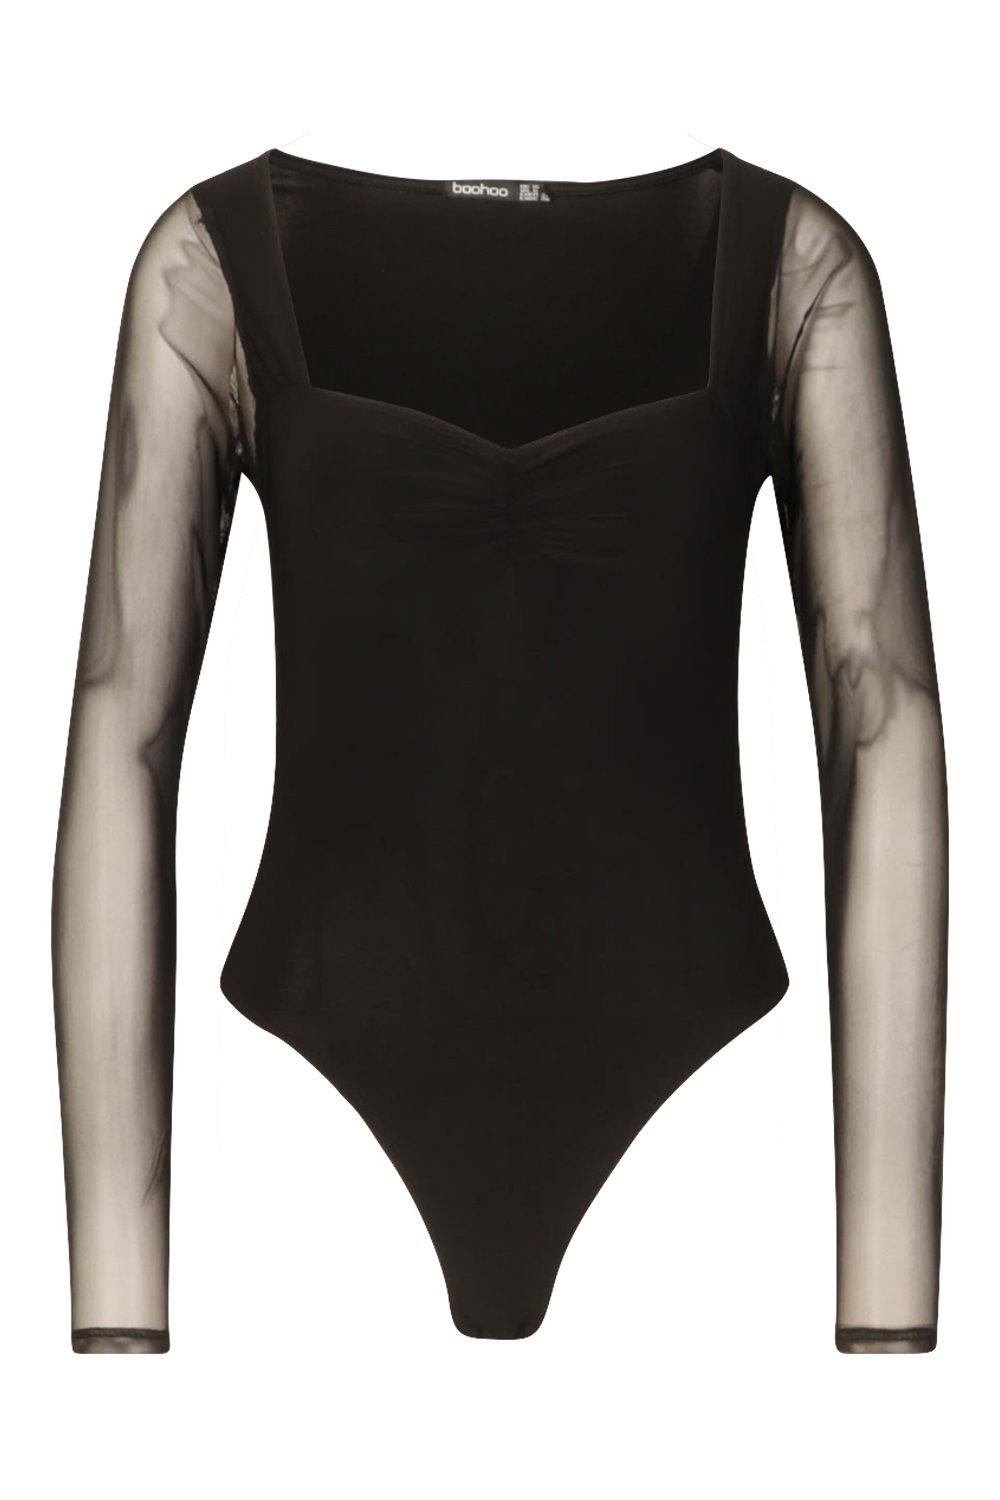 Black Mesh Bodysuit - Ruched Bodysuit - Ruched Mesh Bodysuit - Lulus